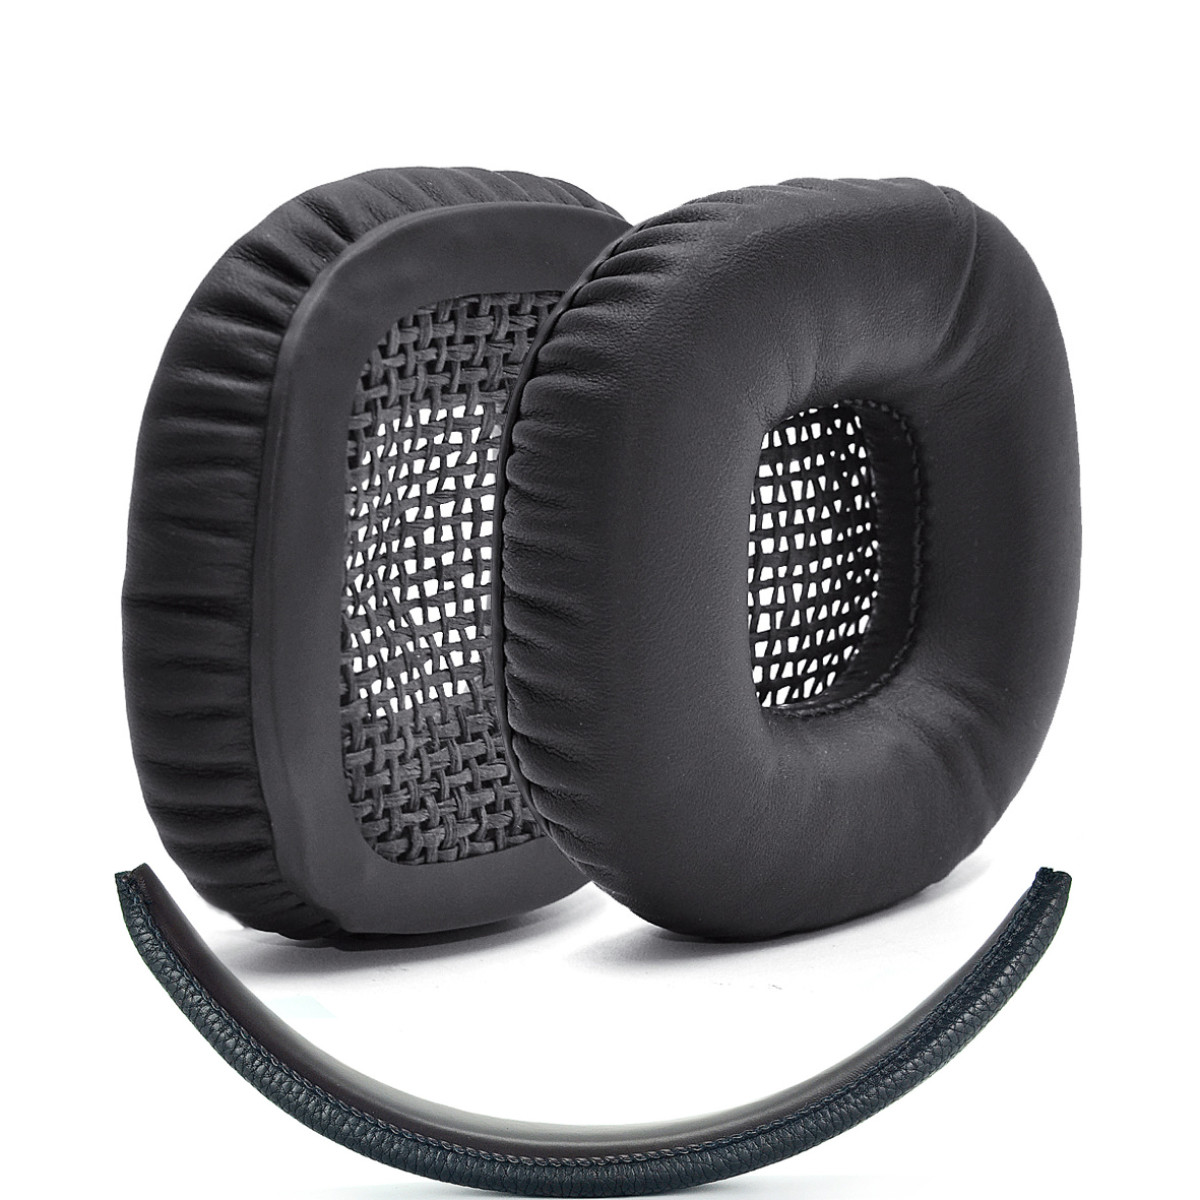 Marshall für: INF passend Full und Ohrpolster Marshall Ma 1 aus Kopfhörer-Ohrpolster Kopfbügel PU-Leder Cover für Paar Schwarz